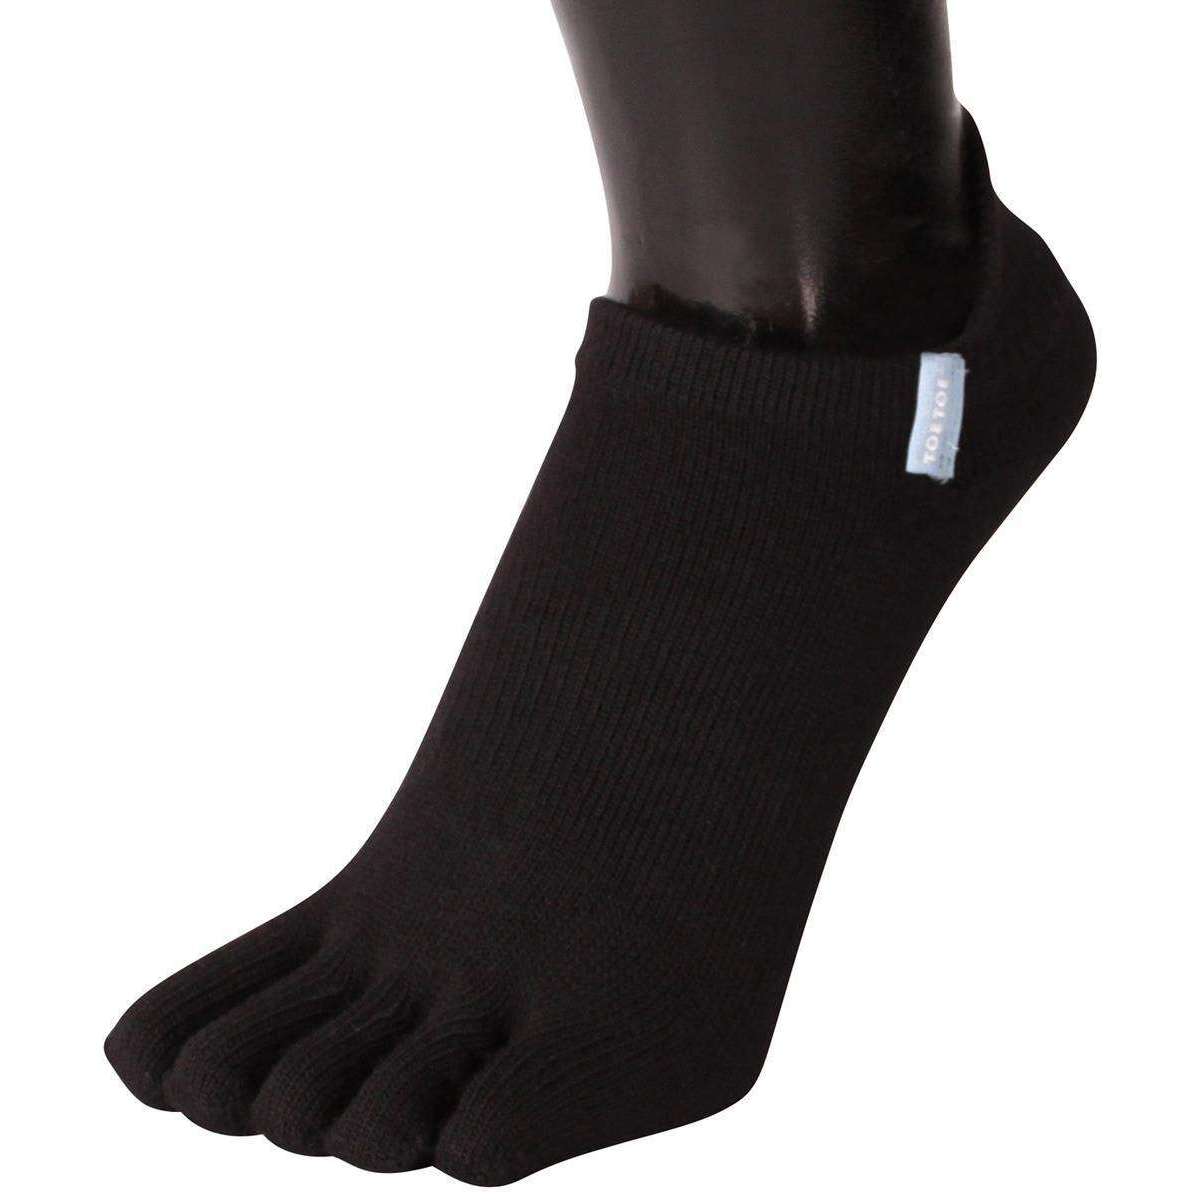 TOETOE Running Trainer Toe Socks - Black